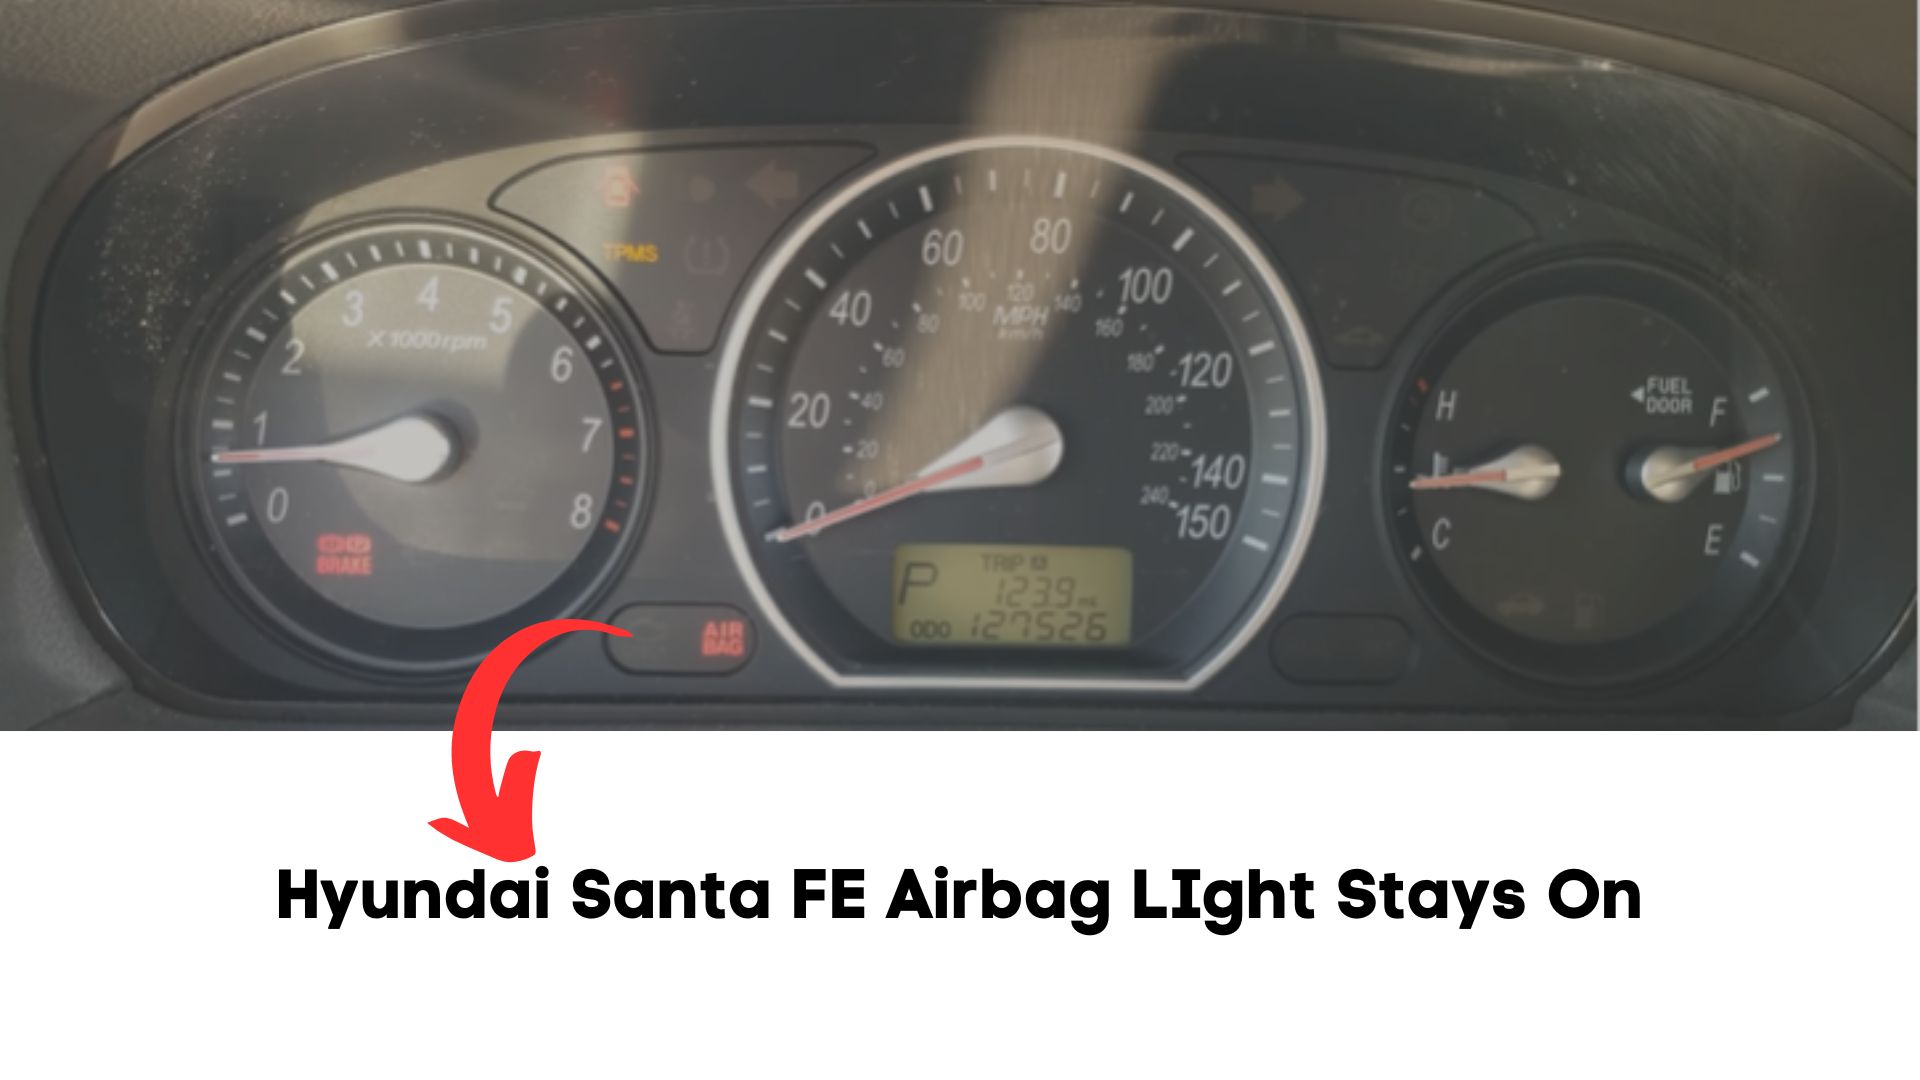 2003, 2004, 2005, 2007, 2017 hyundai santa fe airbag light stays on